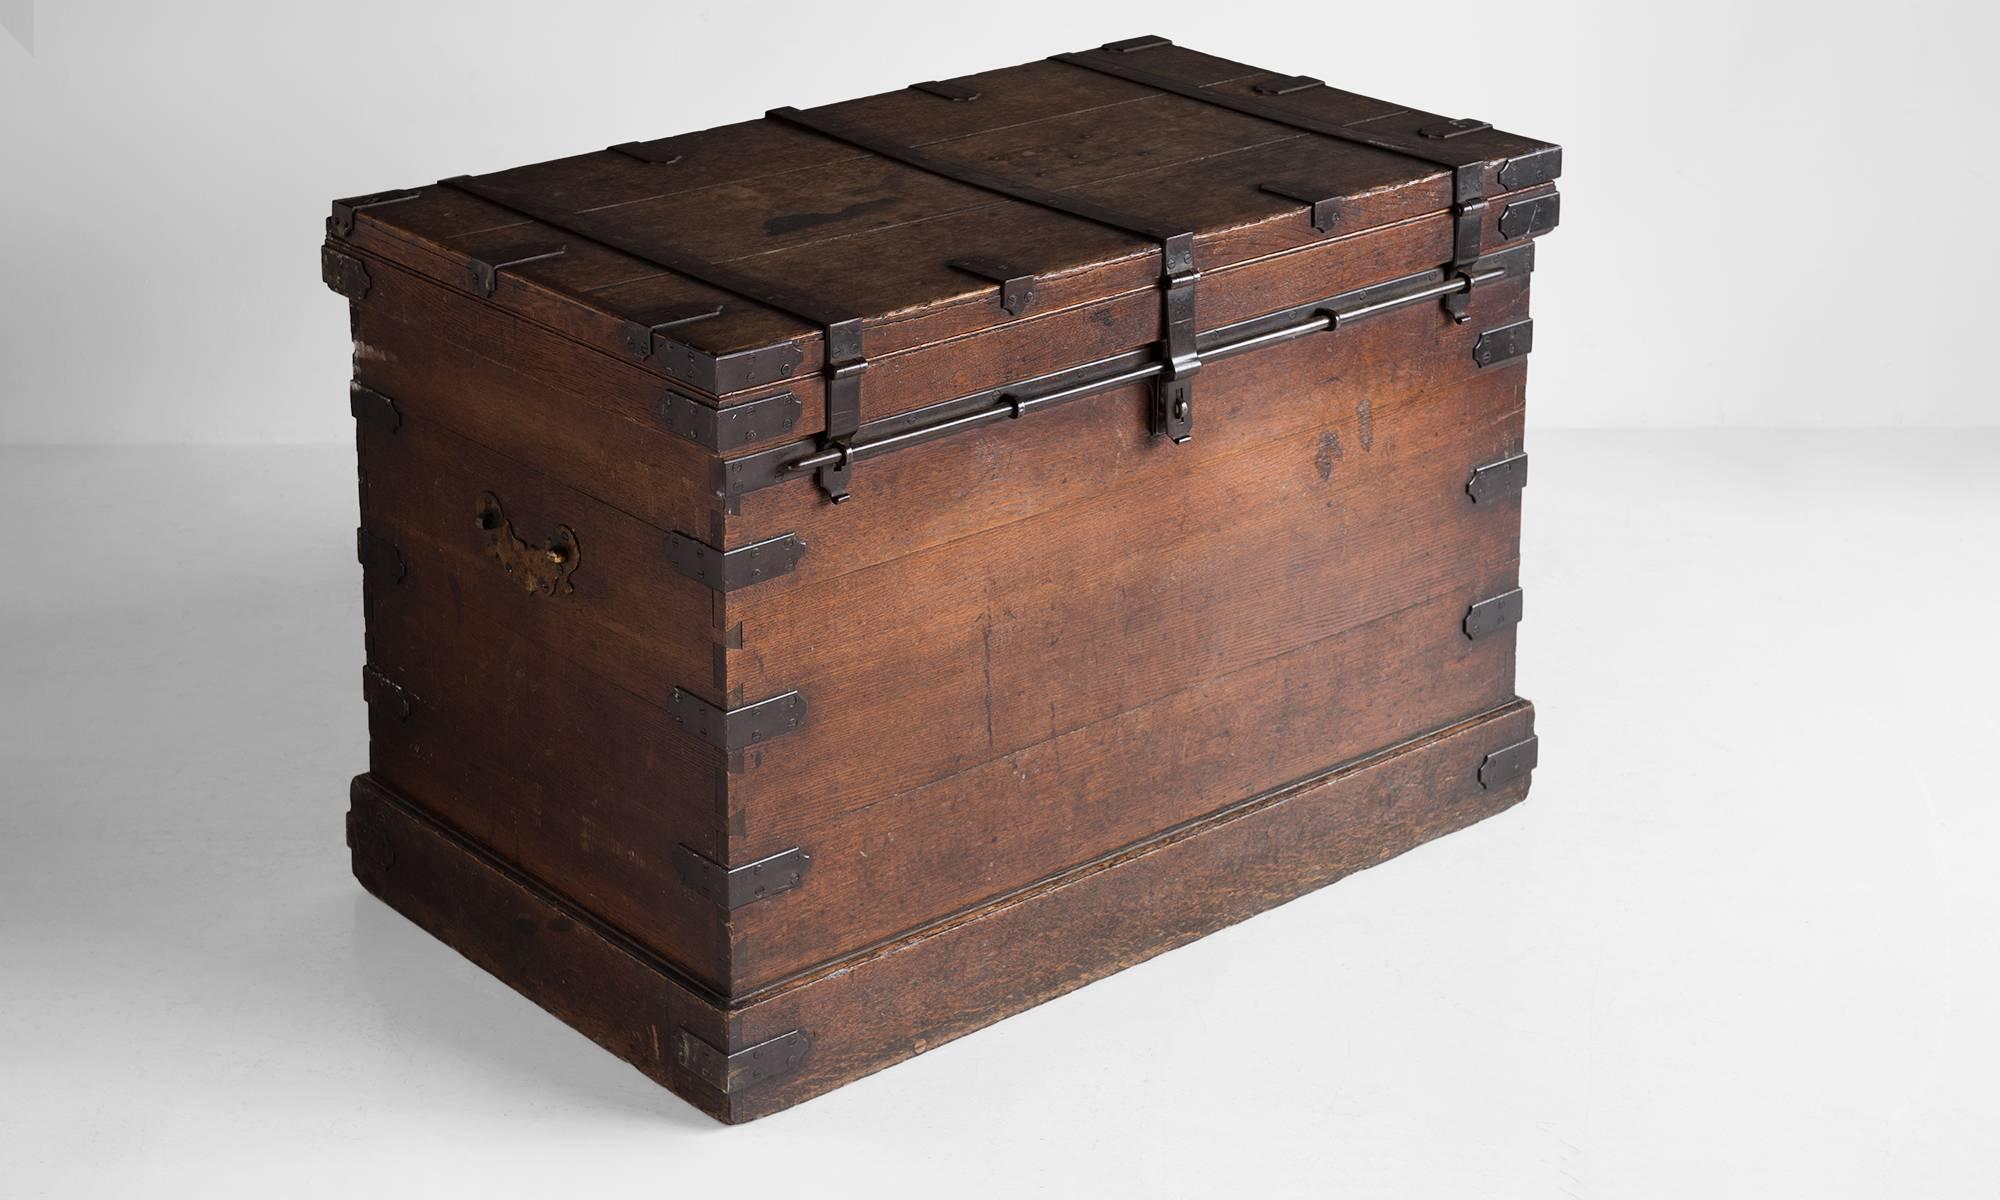 Steel bound oak chest, England circa 1880.

Study oak chest with steel hardware and locking mechanism.